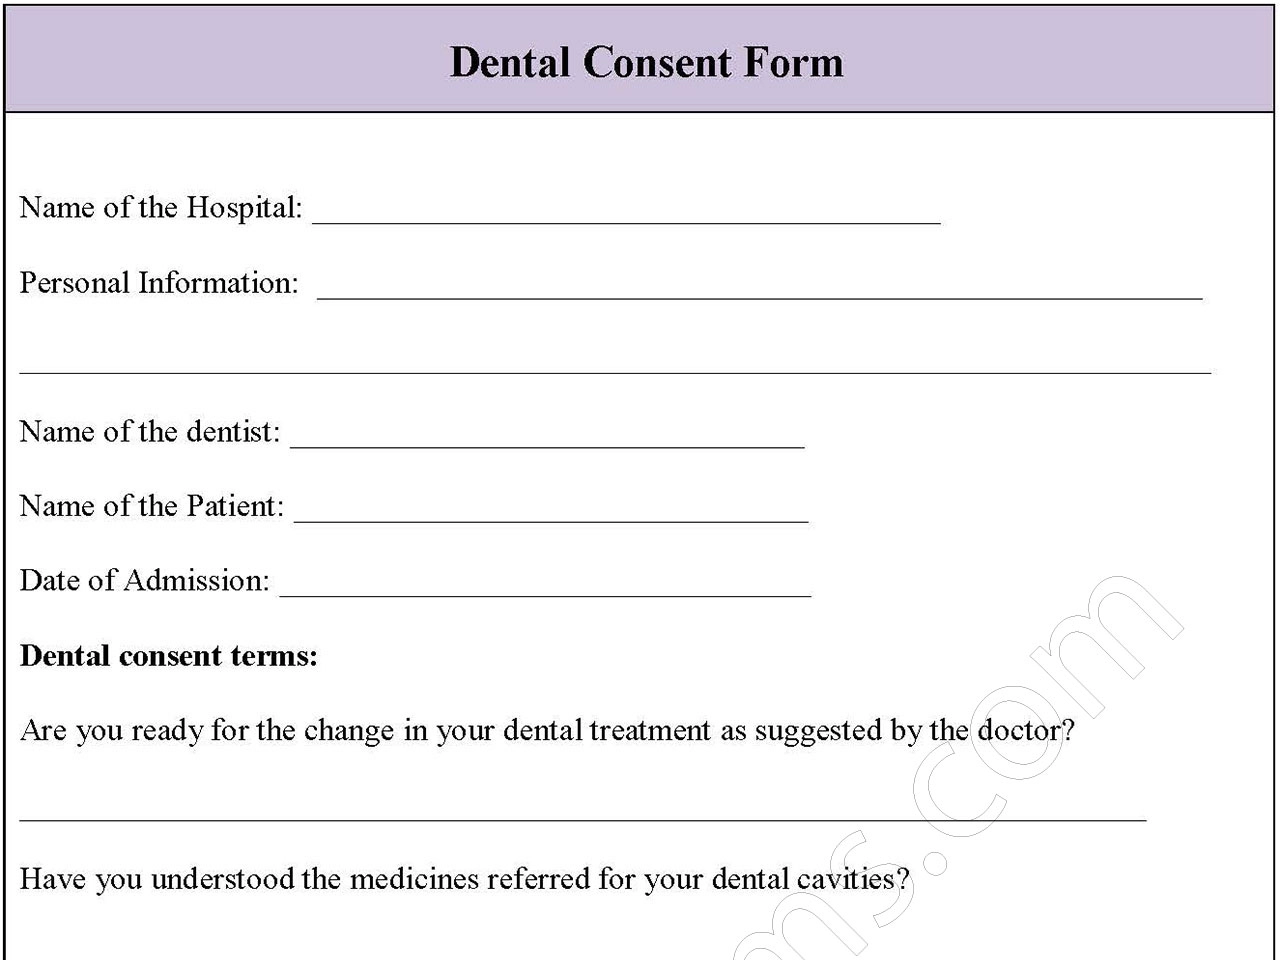 Dental Consent Form